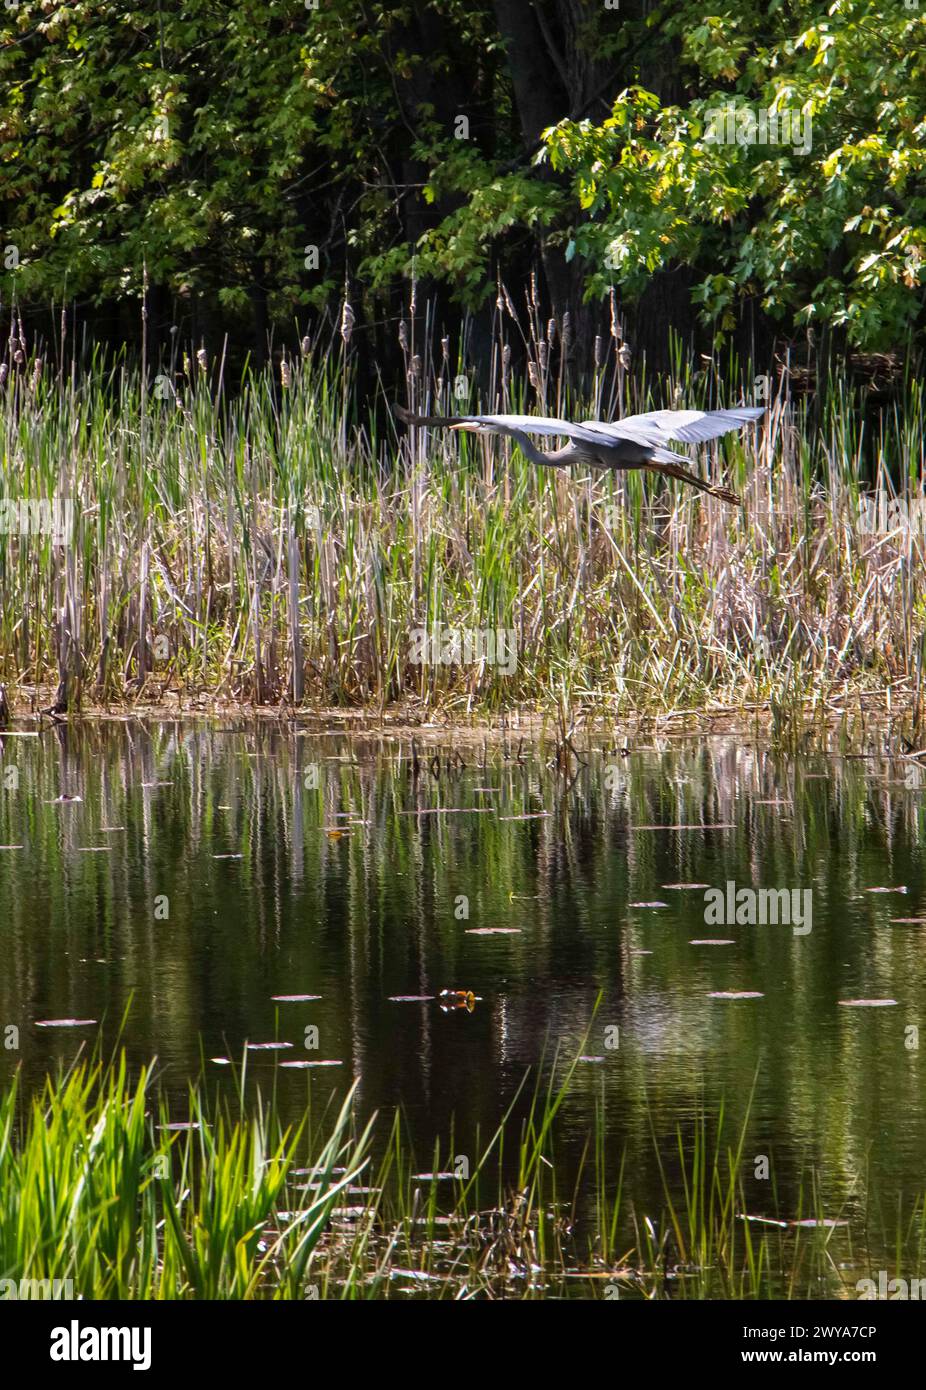 A majestic crane bird soaring above a serene lake, surrounded by lush greenery Stock Photo